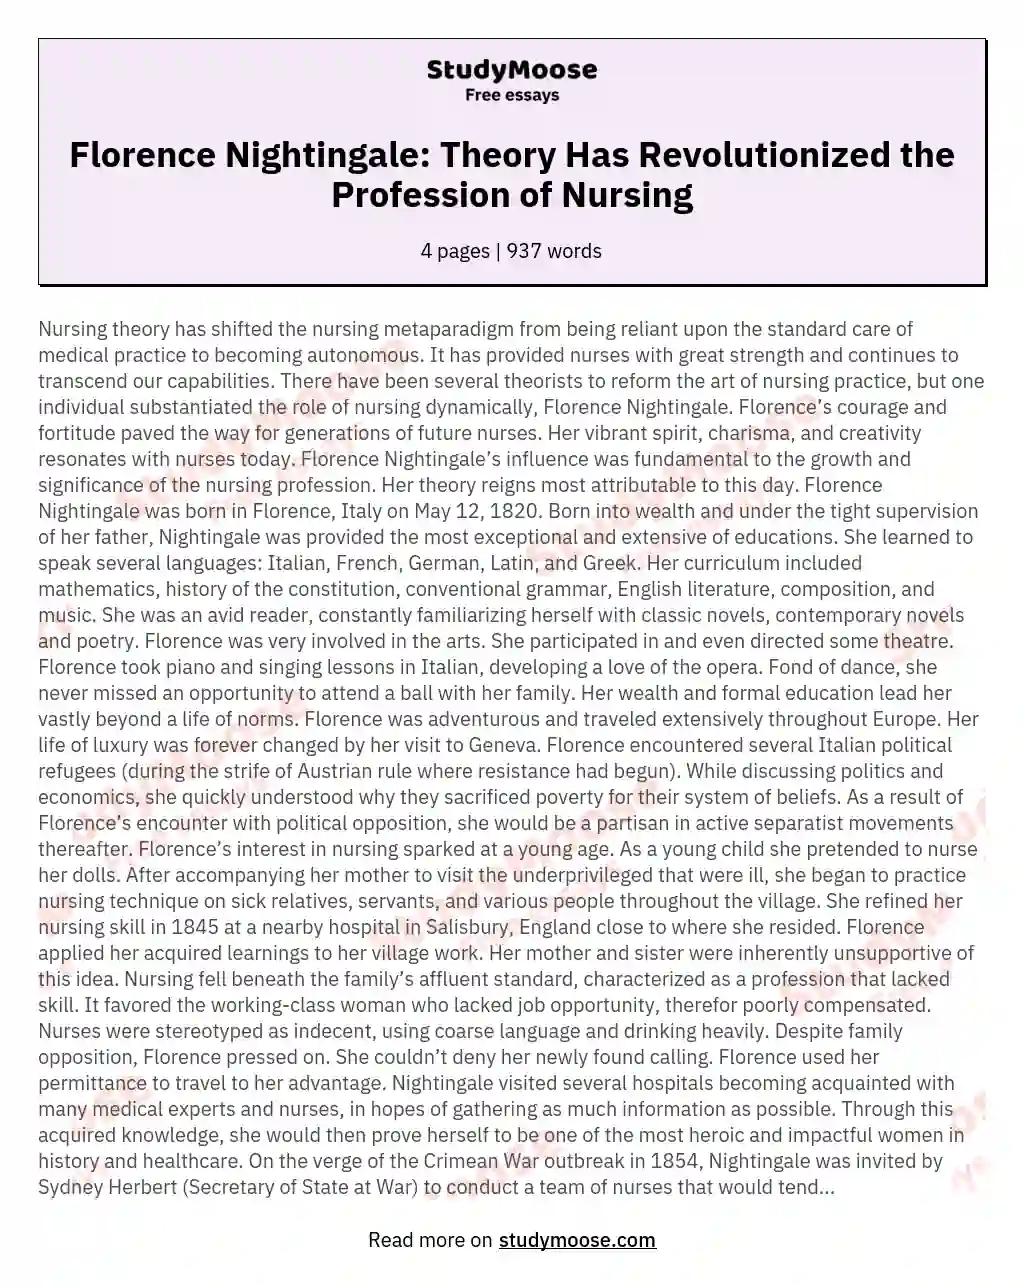 Florence Nightingale: Theory Has Revolutionized the Profession of Nursing